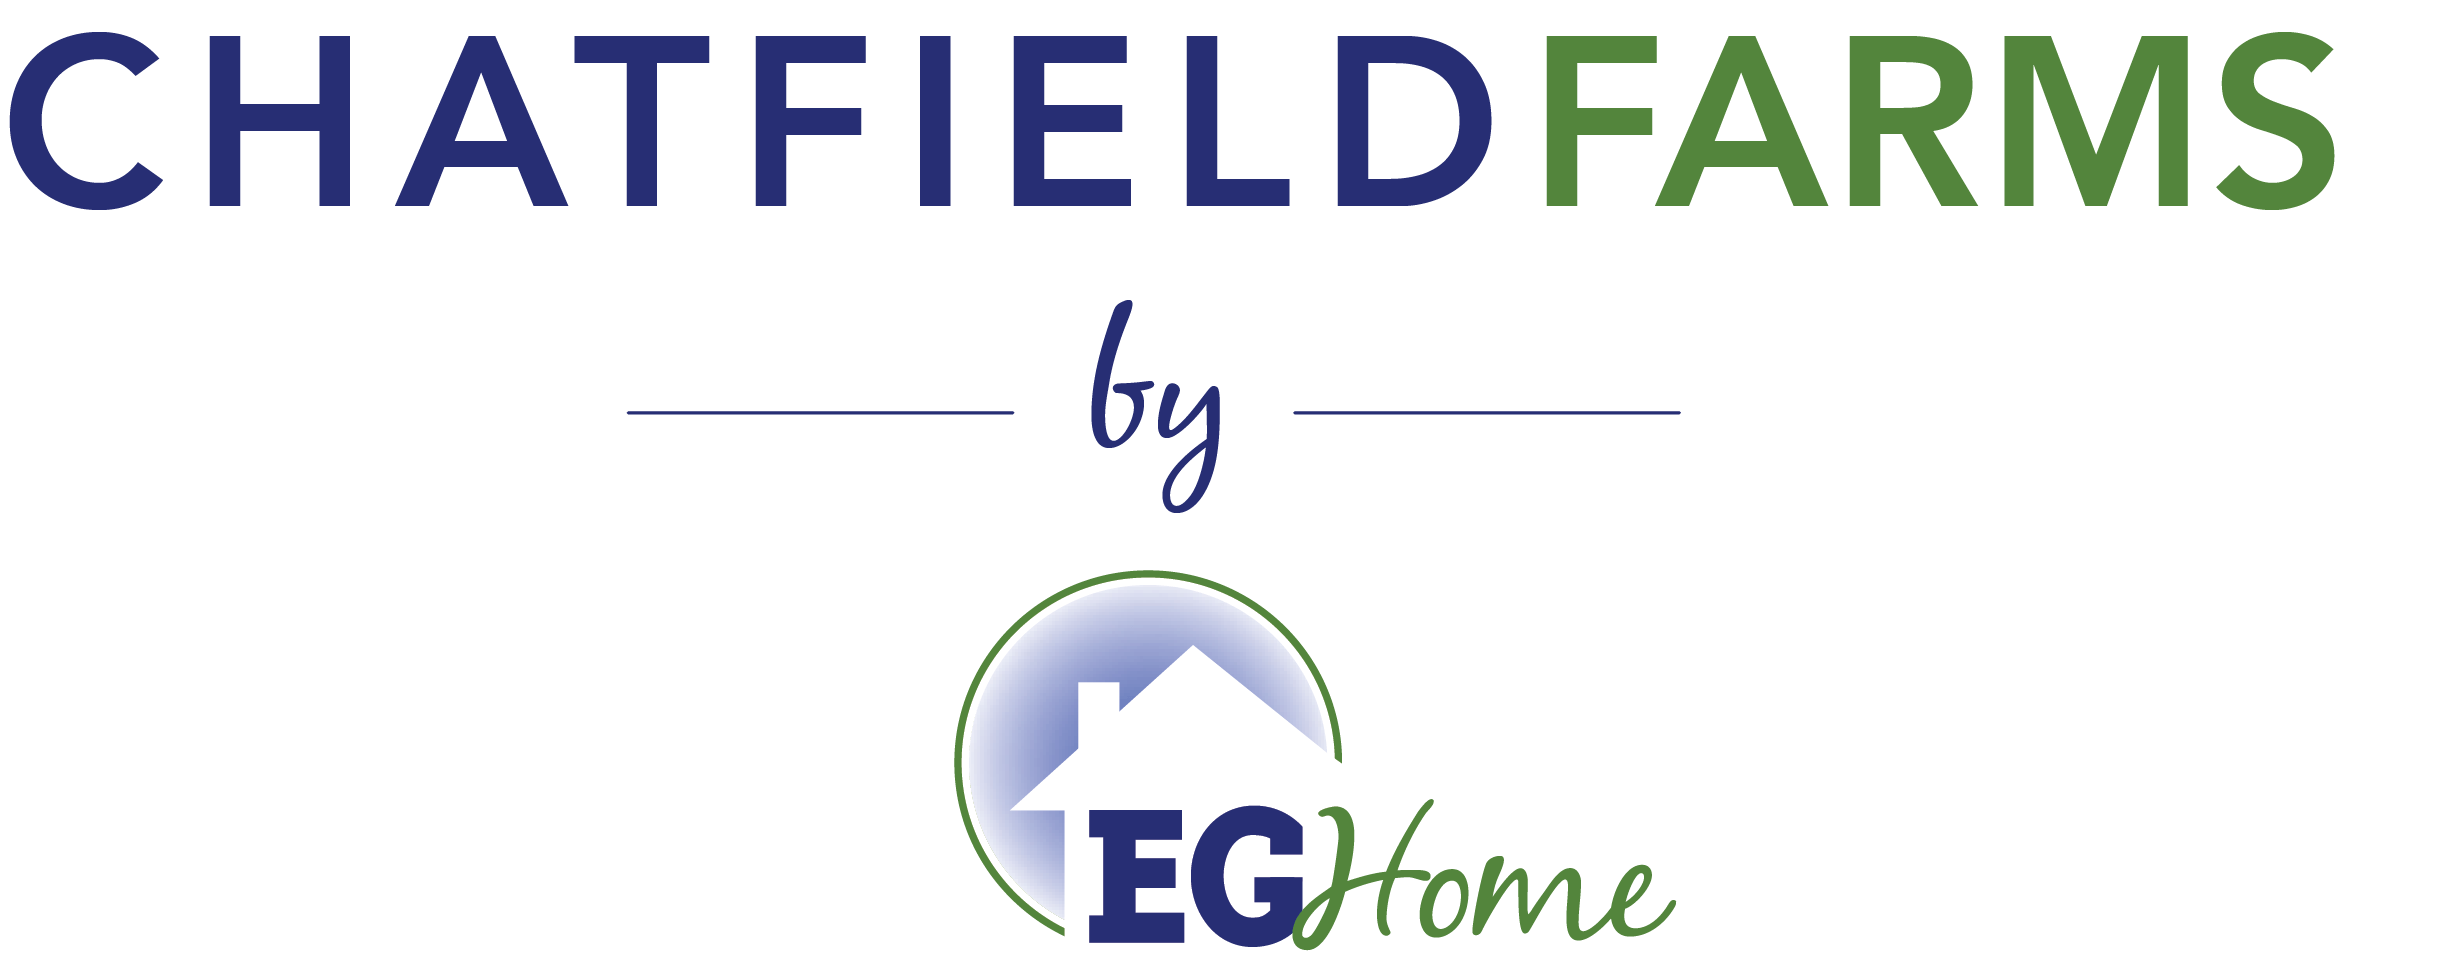 Chatfield Logo - Chatfield Farms | 55+ Community | Active Adult Community